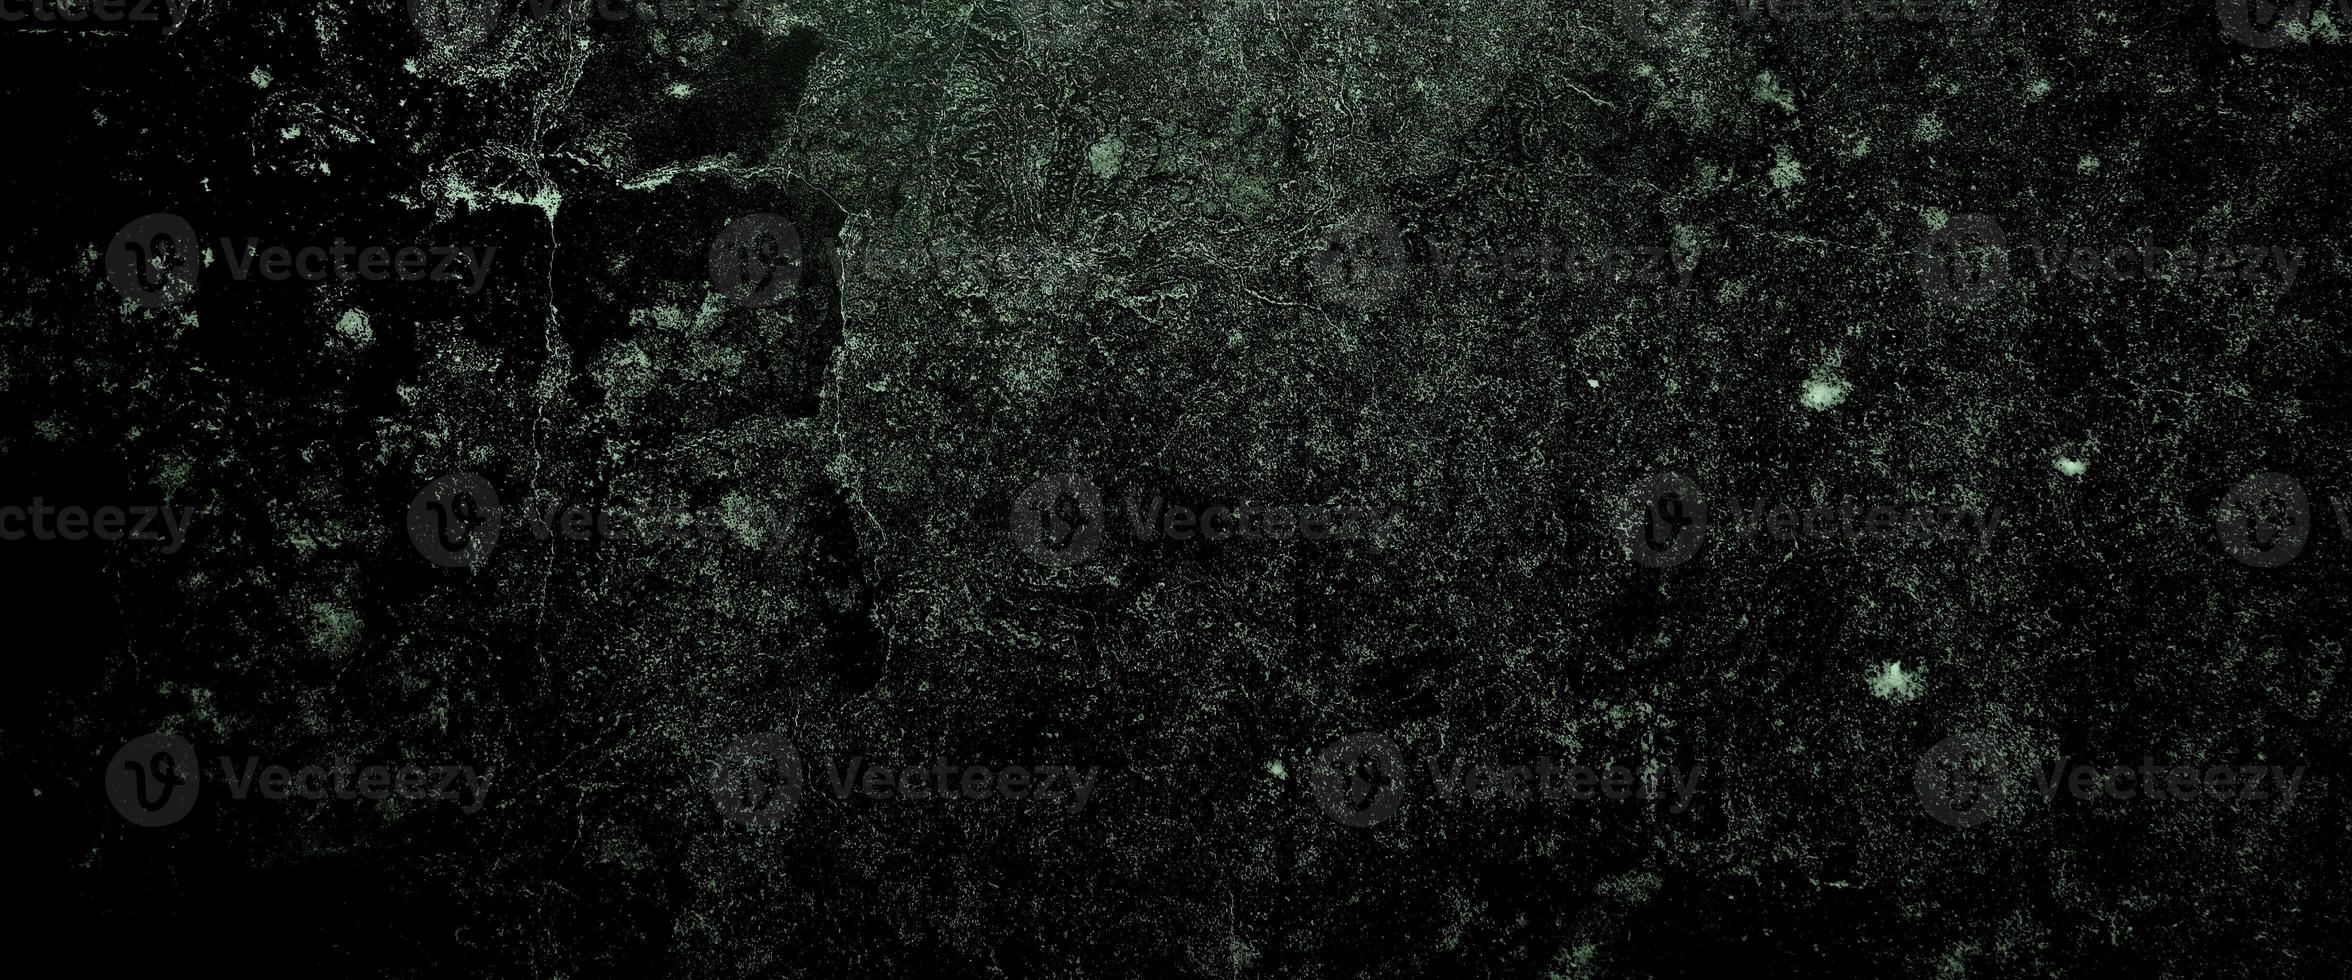 Muros oscuros de miedo, textura de cemento de hormigón negro ligeramente claro para el fondo foto